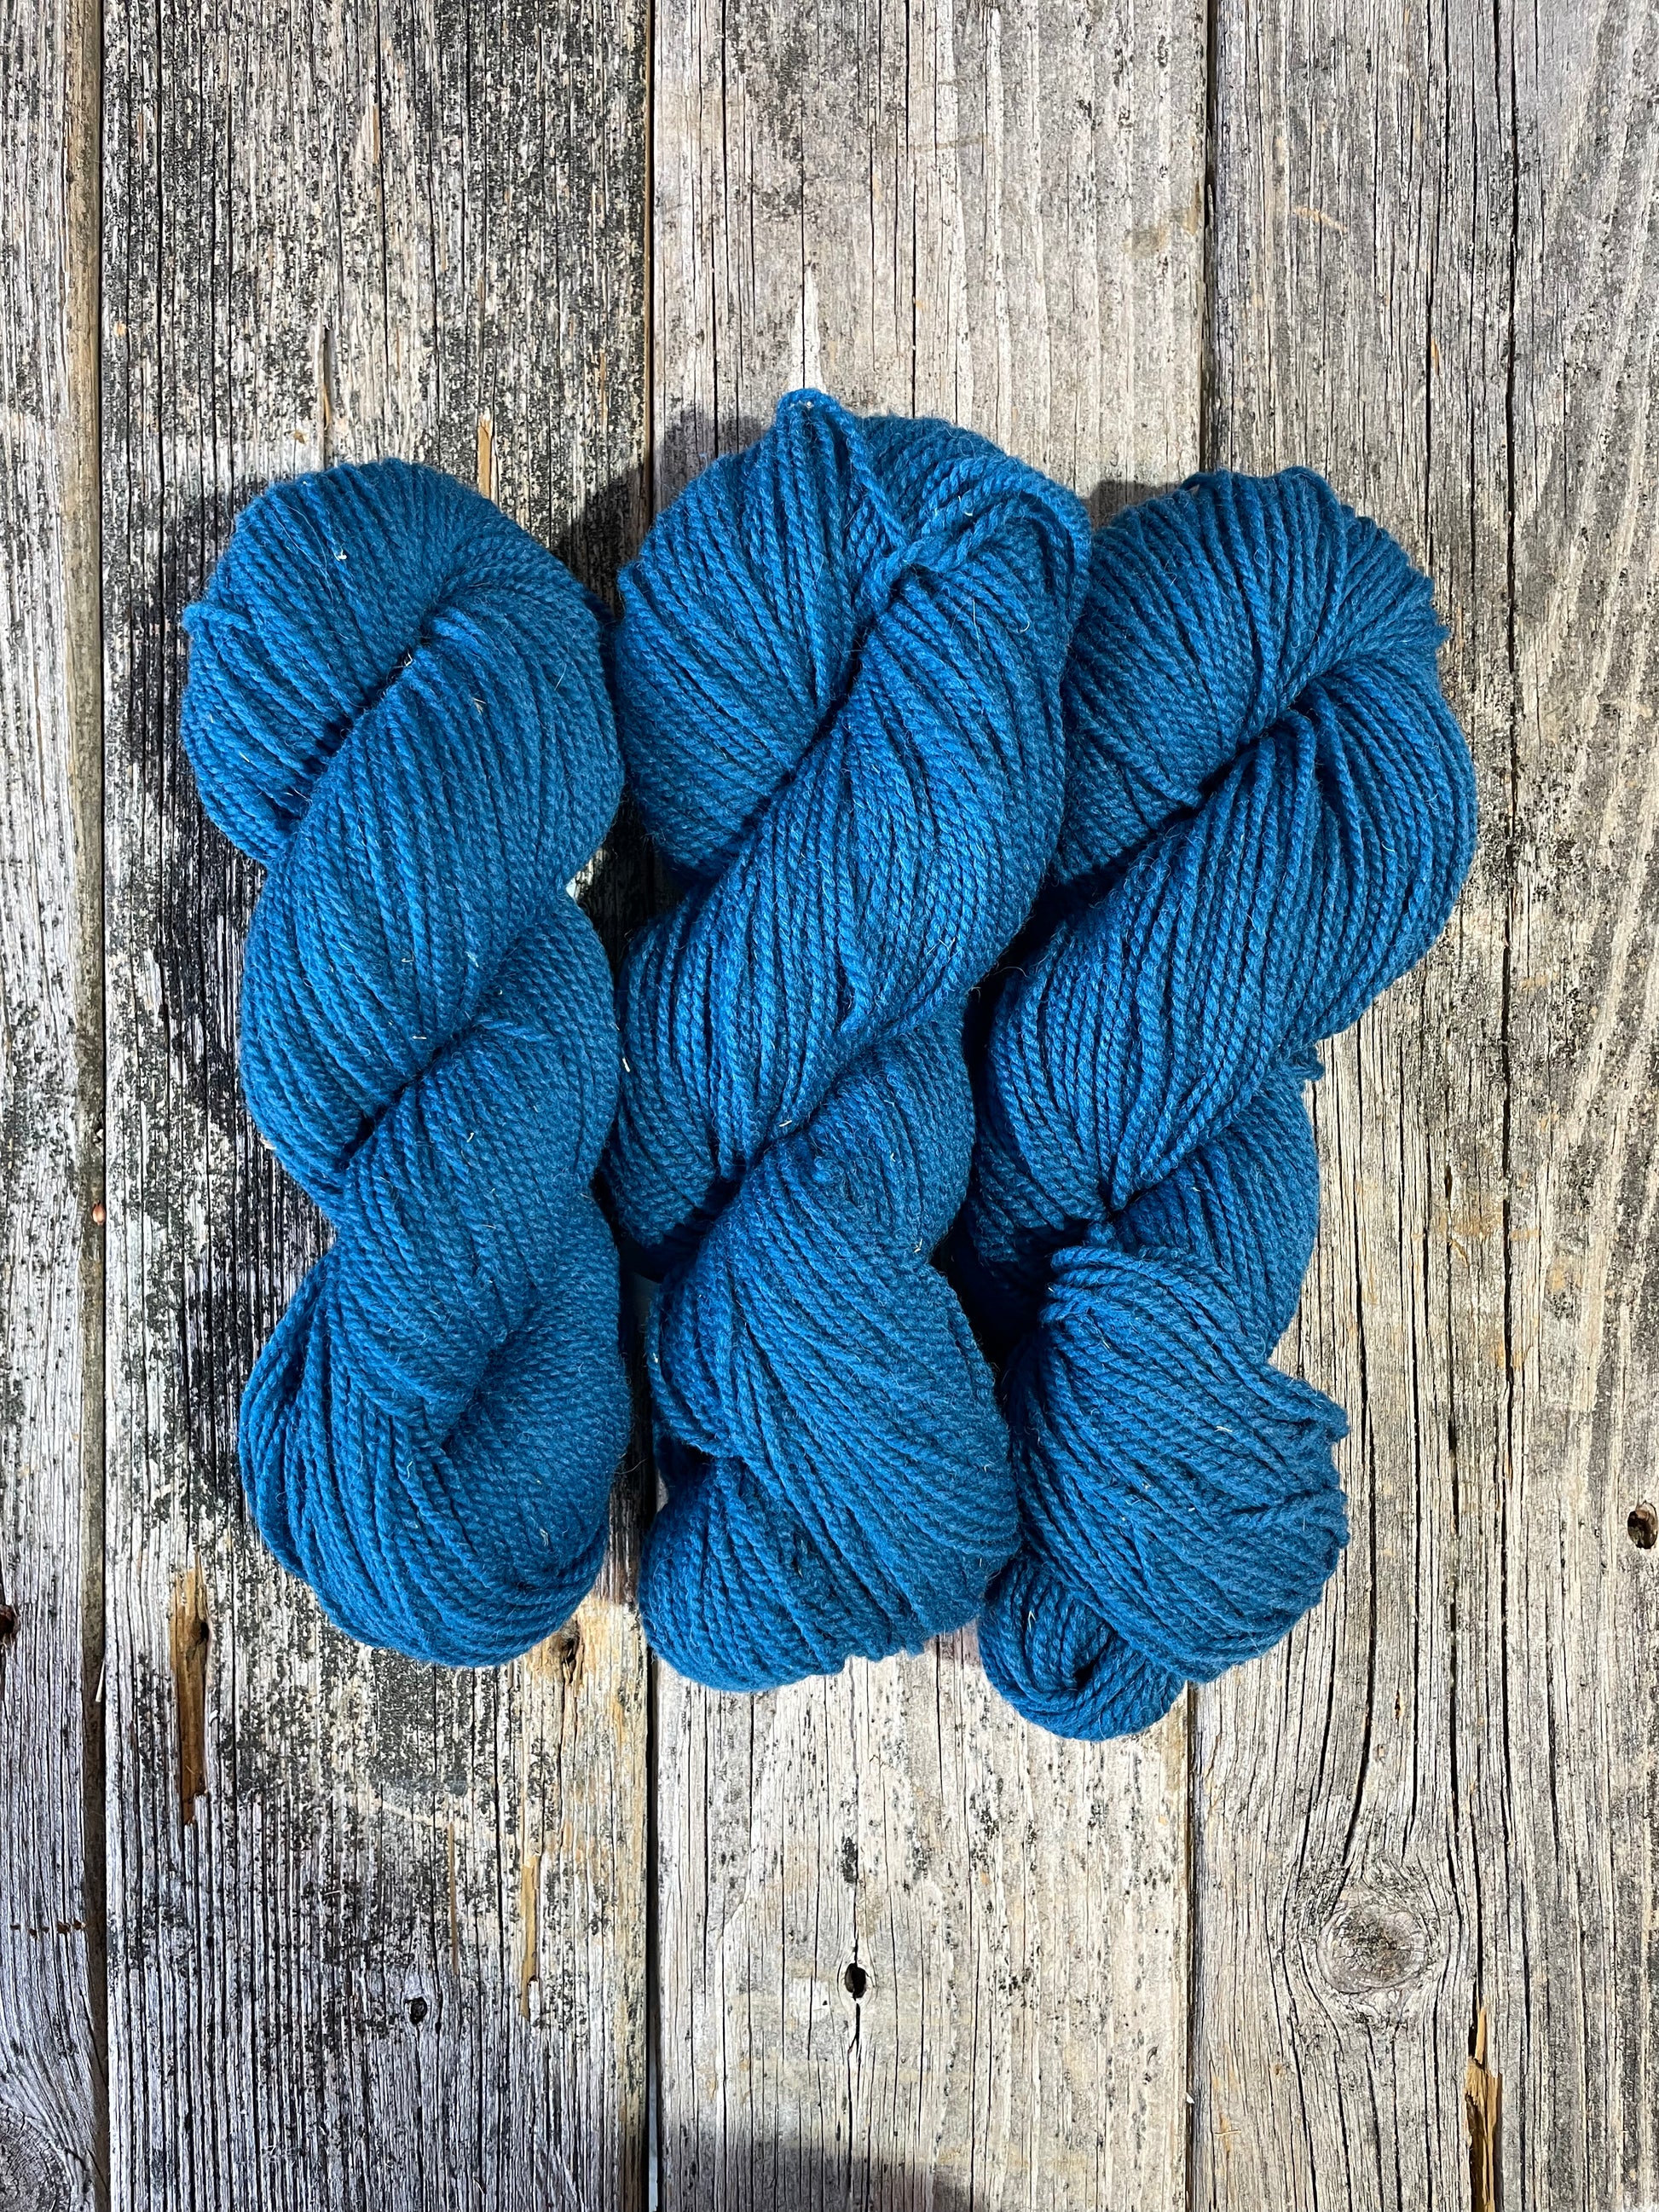 Briggs & Little Heritage: Teal Blue - Maine Yarn & Fiber Supply